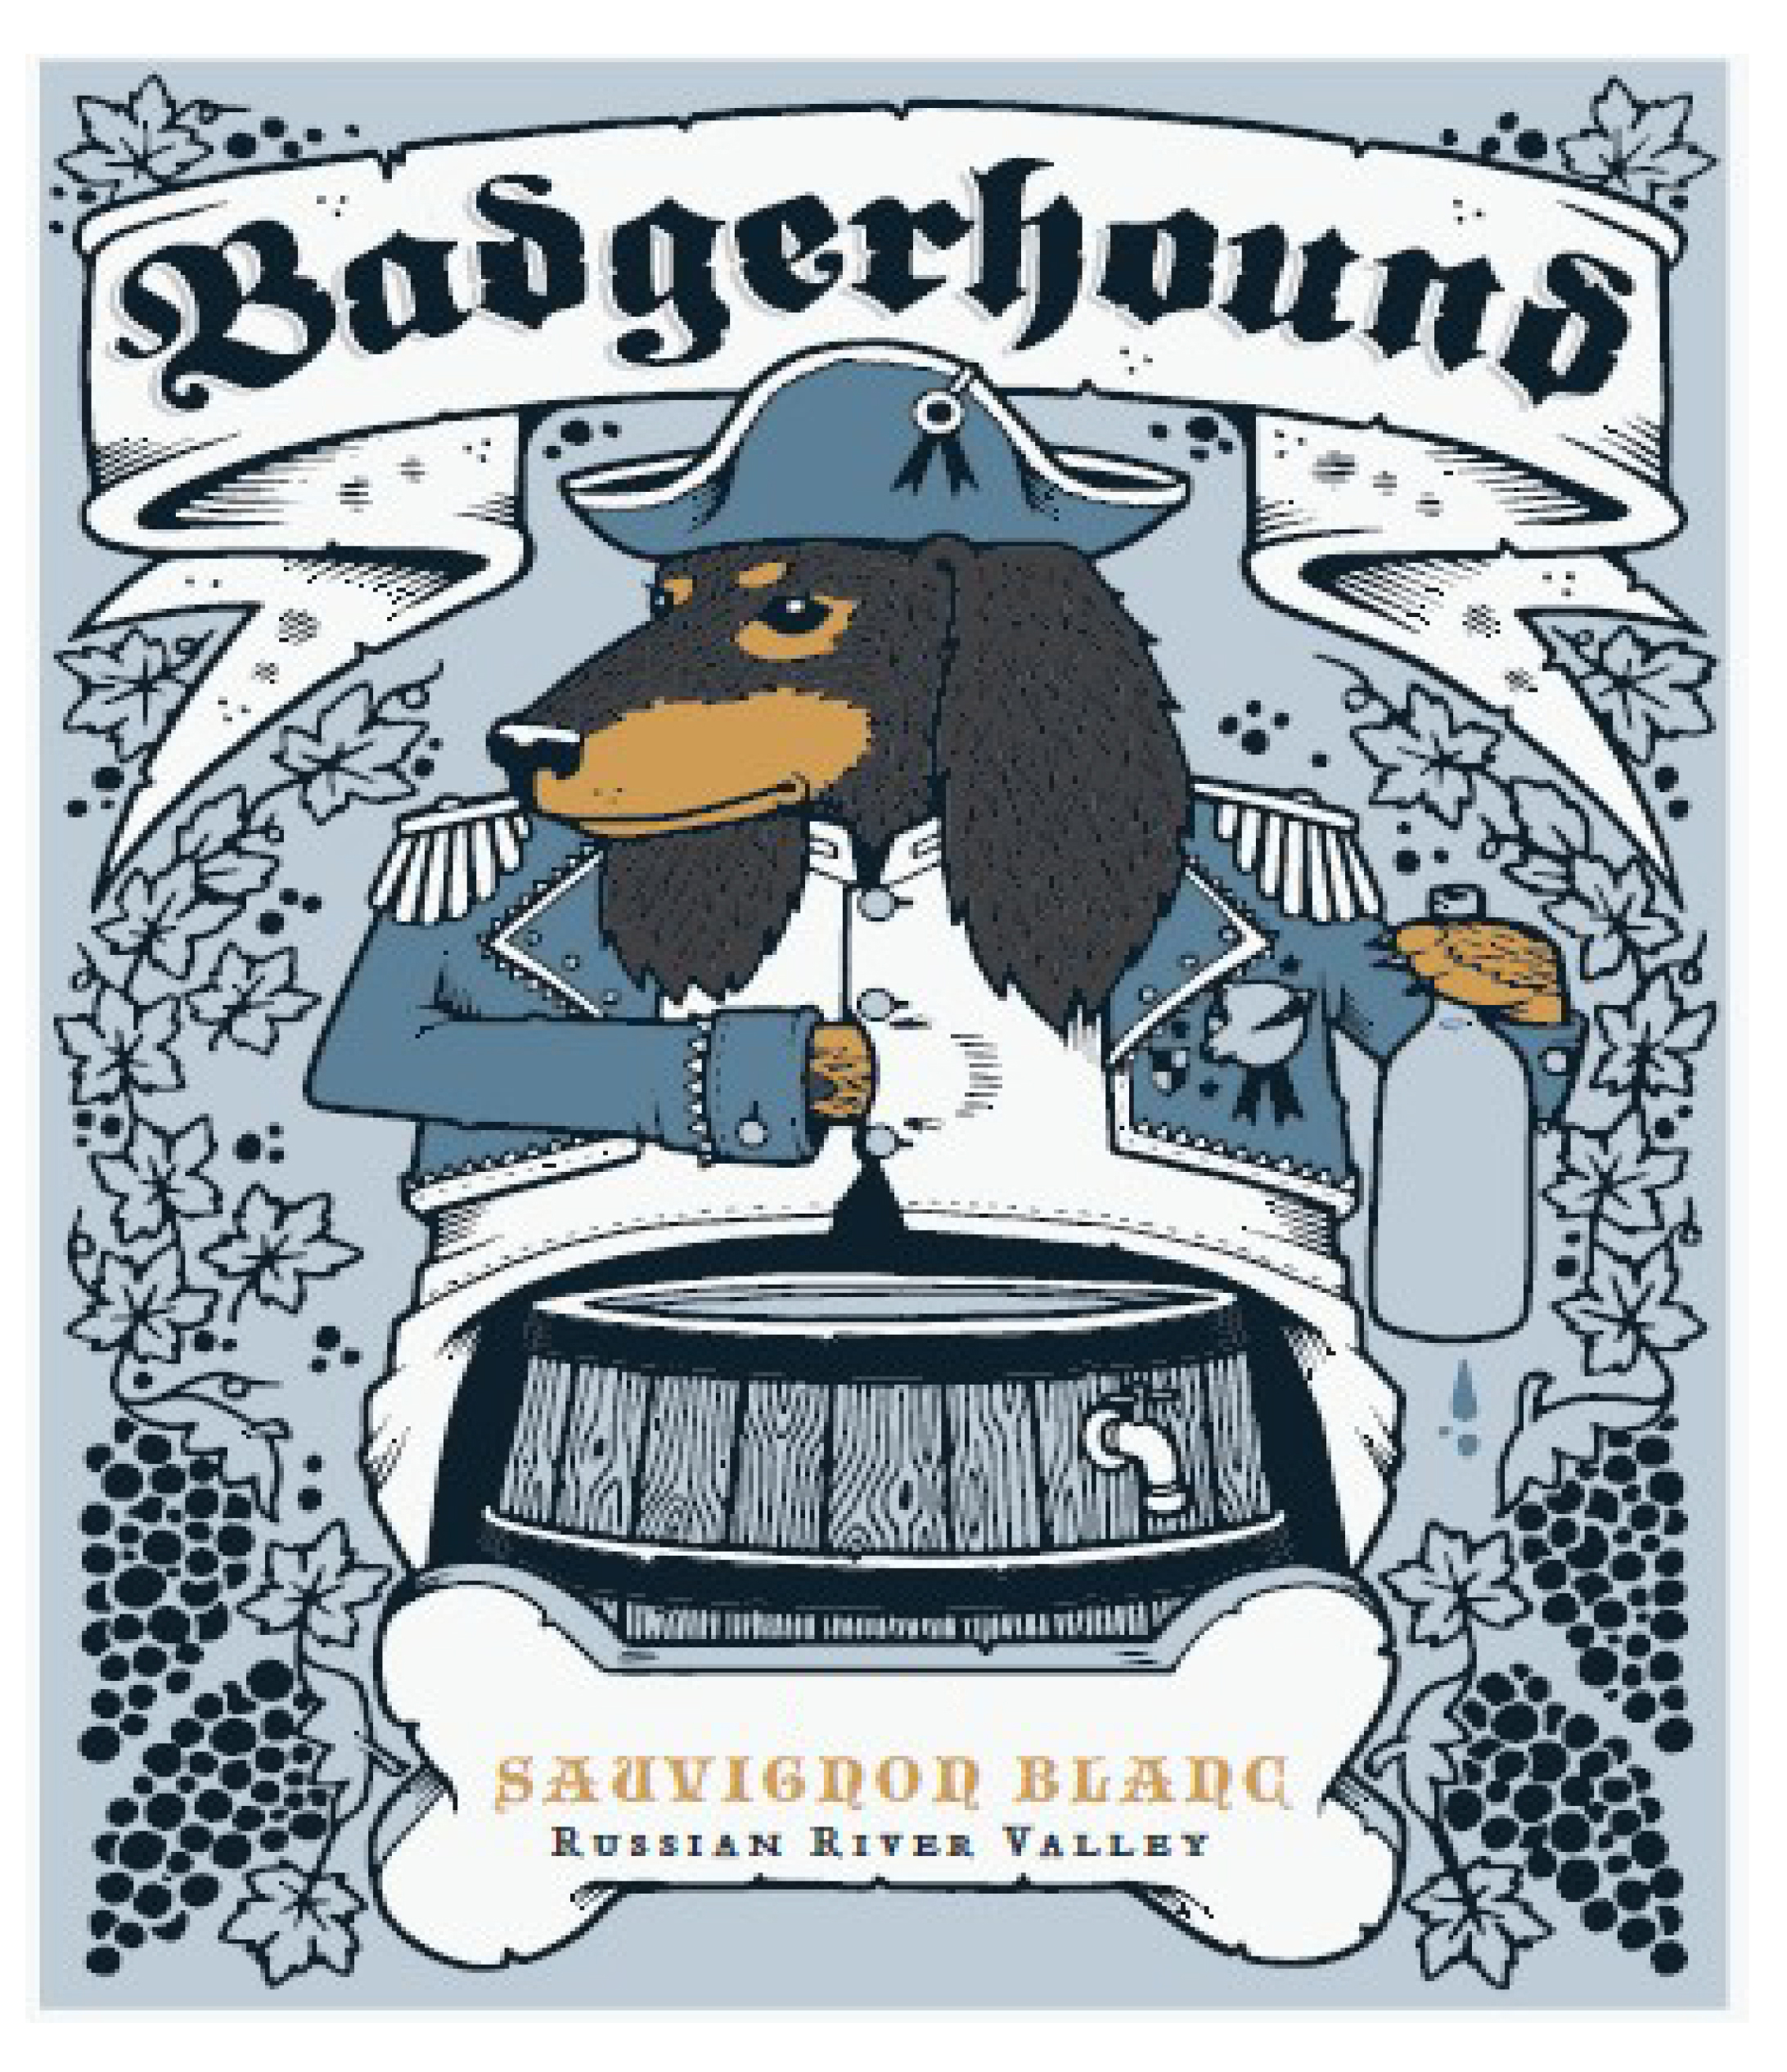 Badgerhound - Sauvignon Blanc label